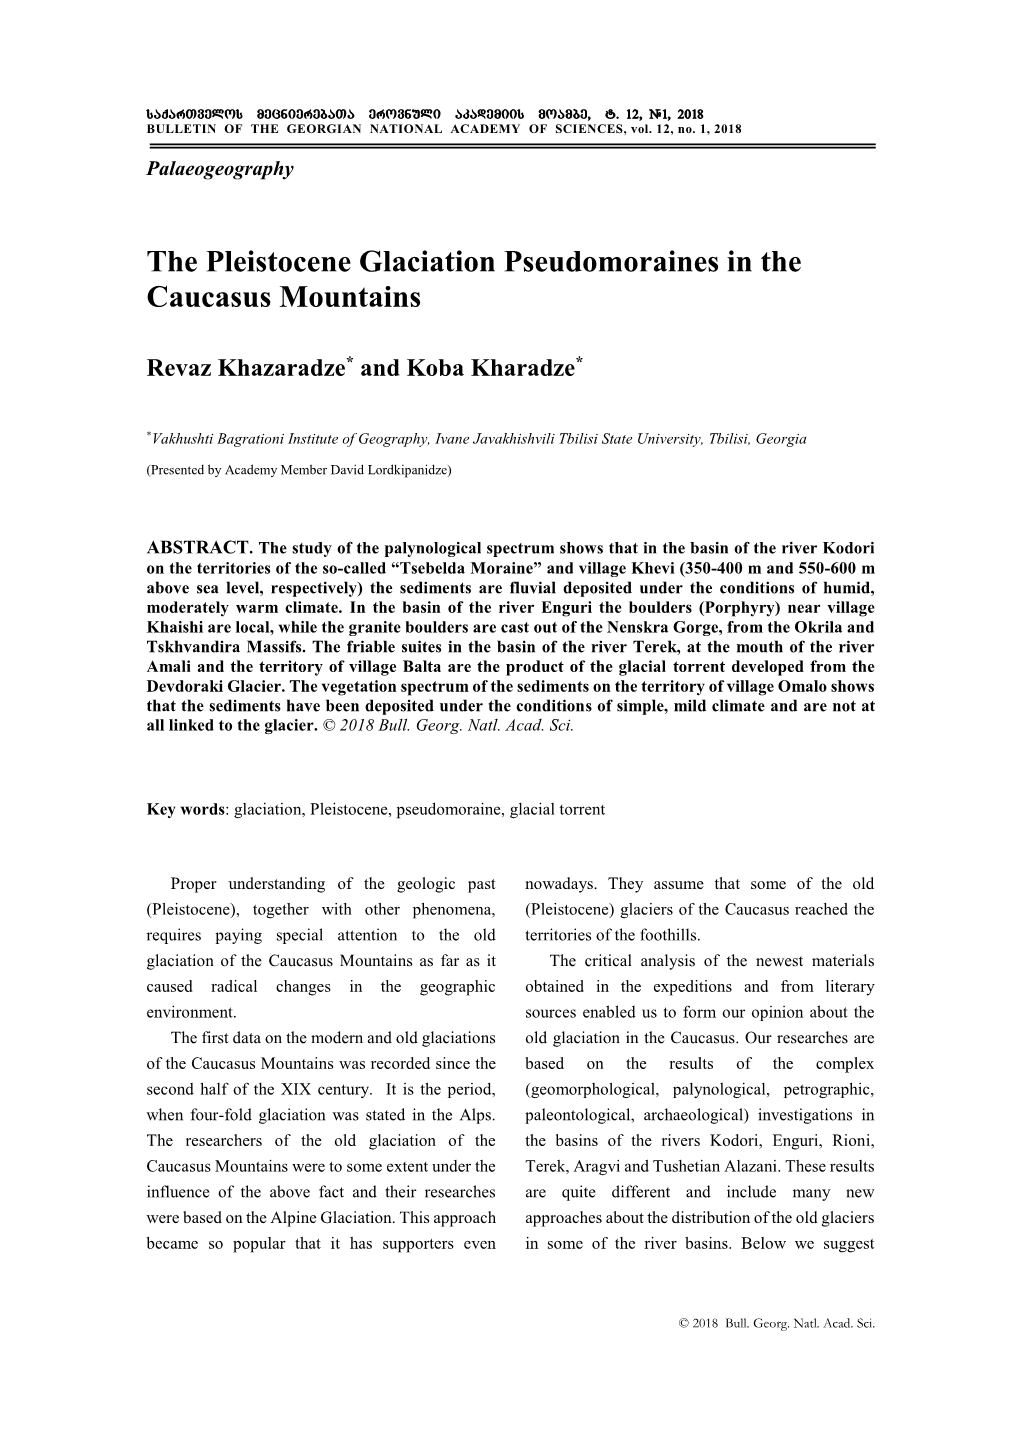 The Pleistocene Glaciation Pseudomoraines in the Caucasus Mountains